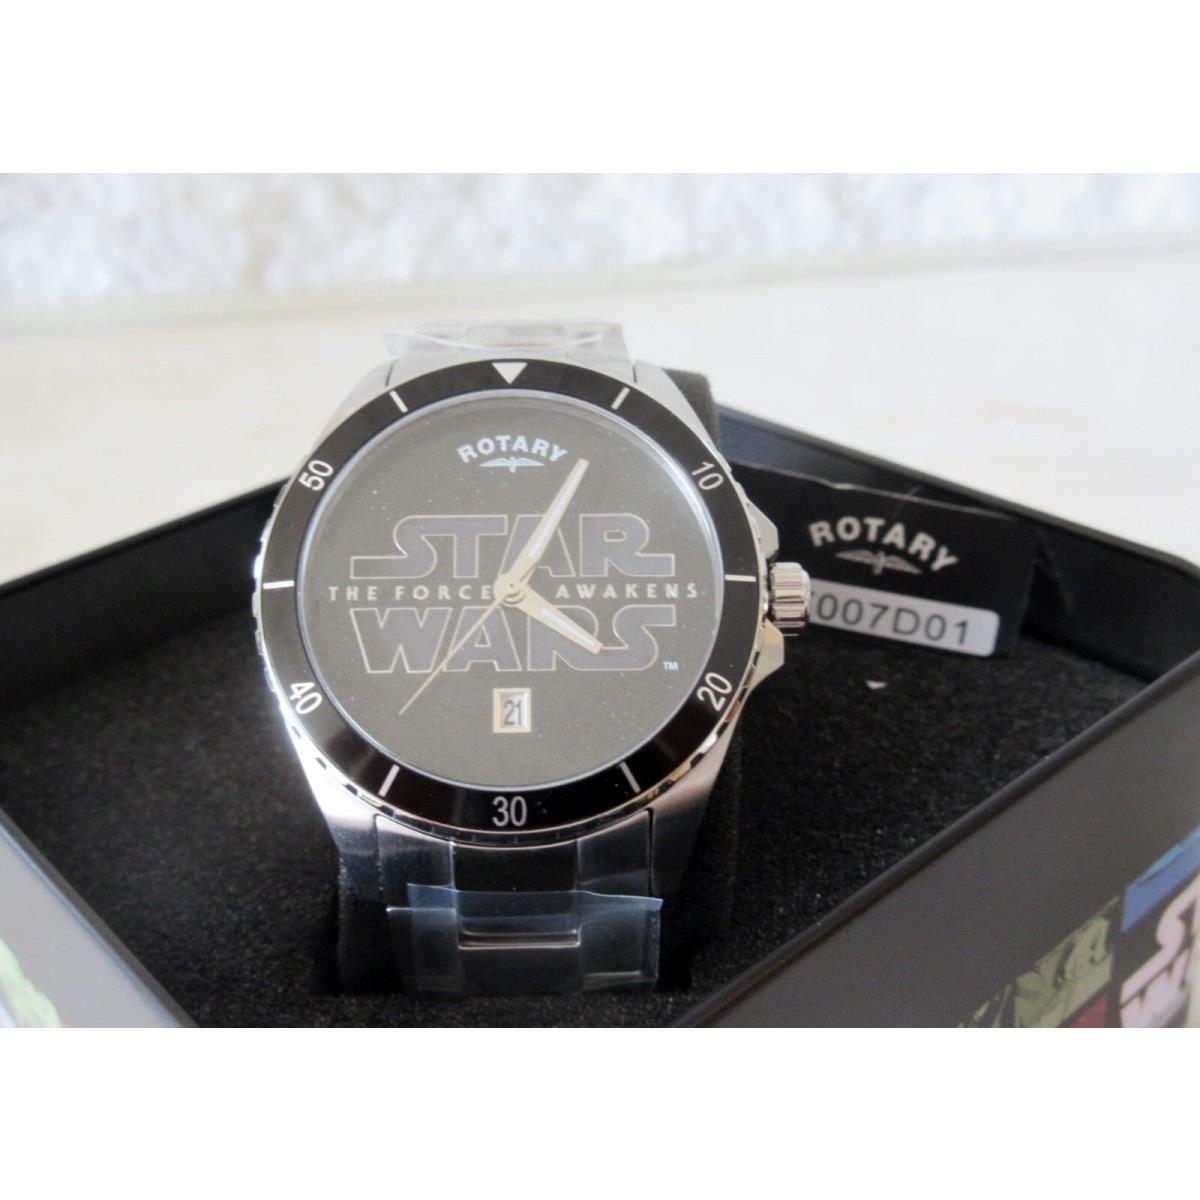 Rotary Star Wars Watch Model 7007D01